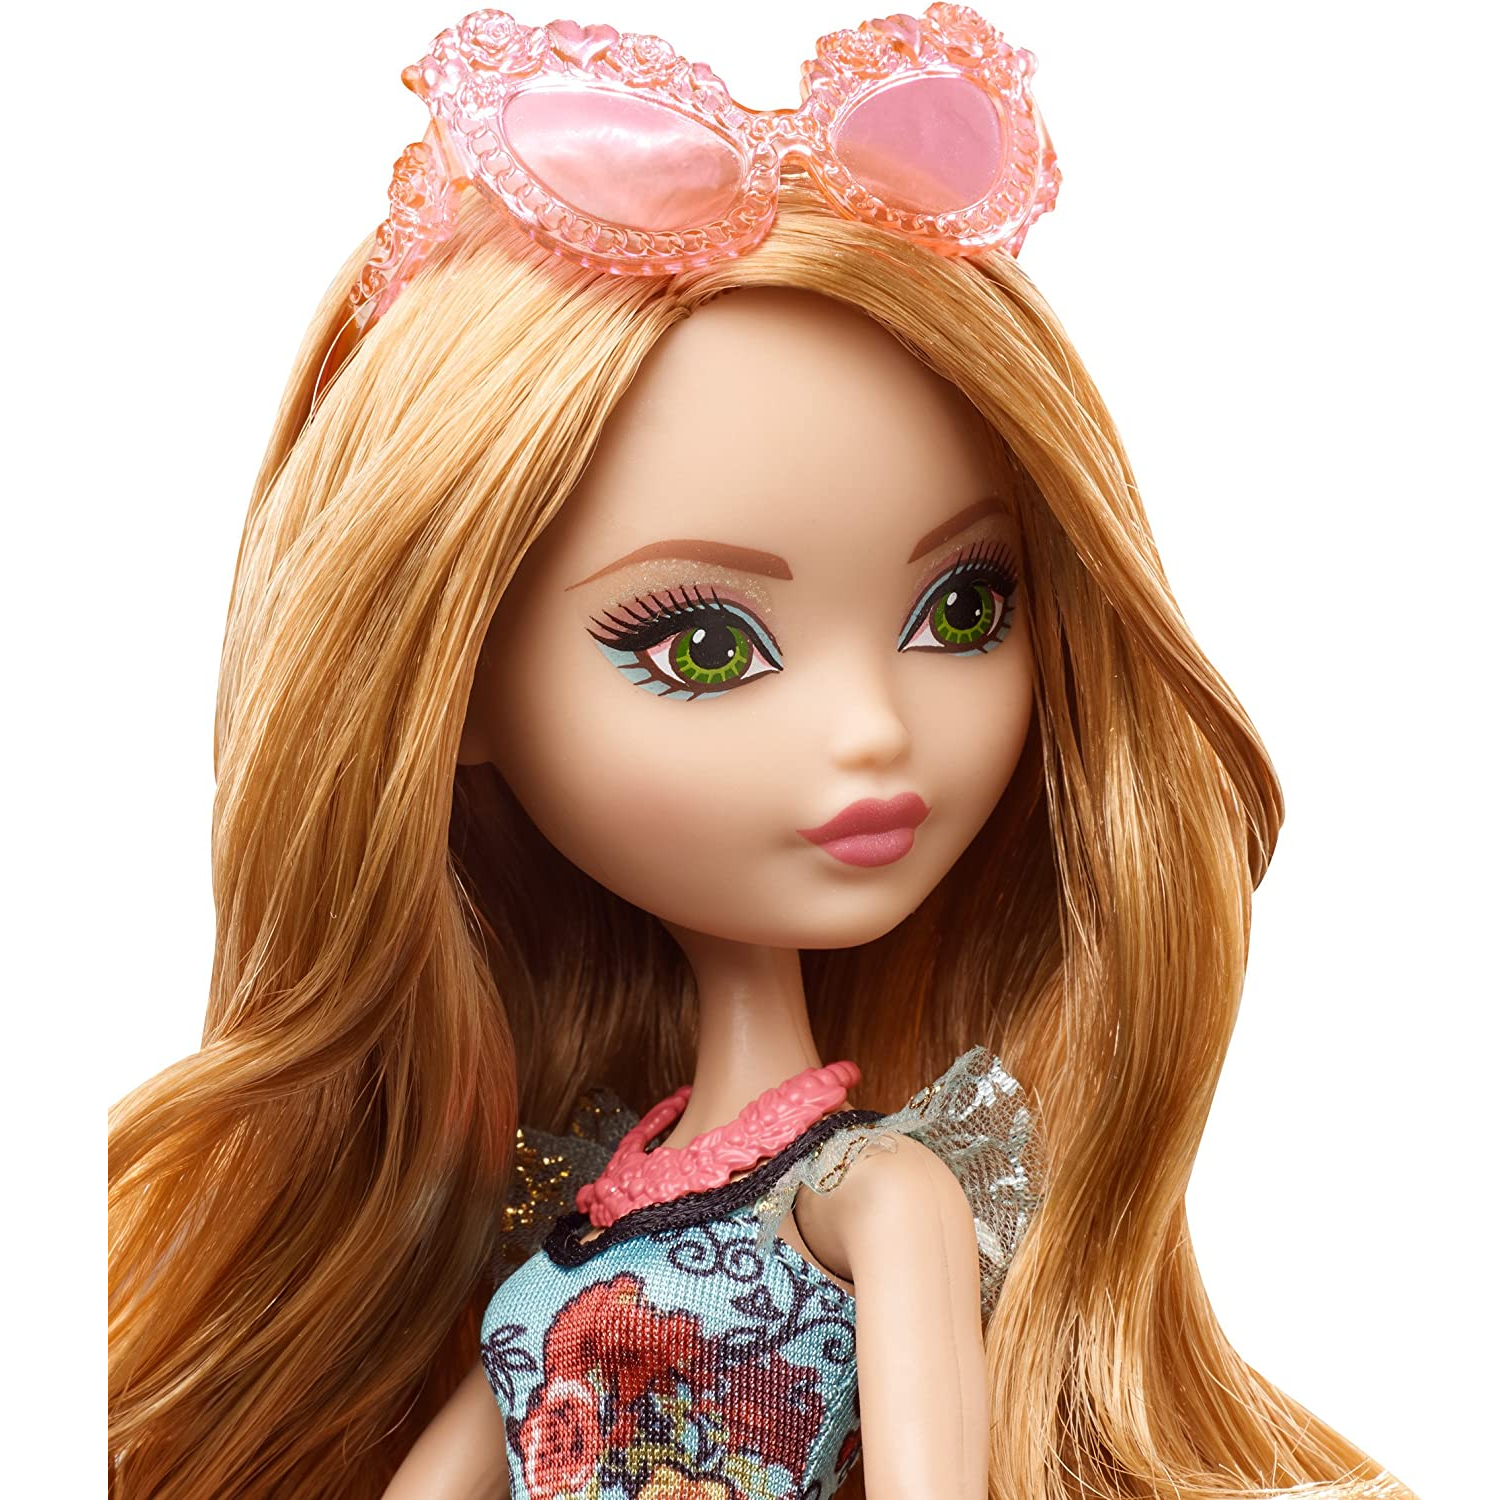 → Boneca Ever After High Ashlynn Ella - Mattel é bom? Vale a pena?